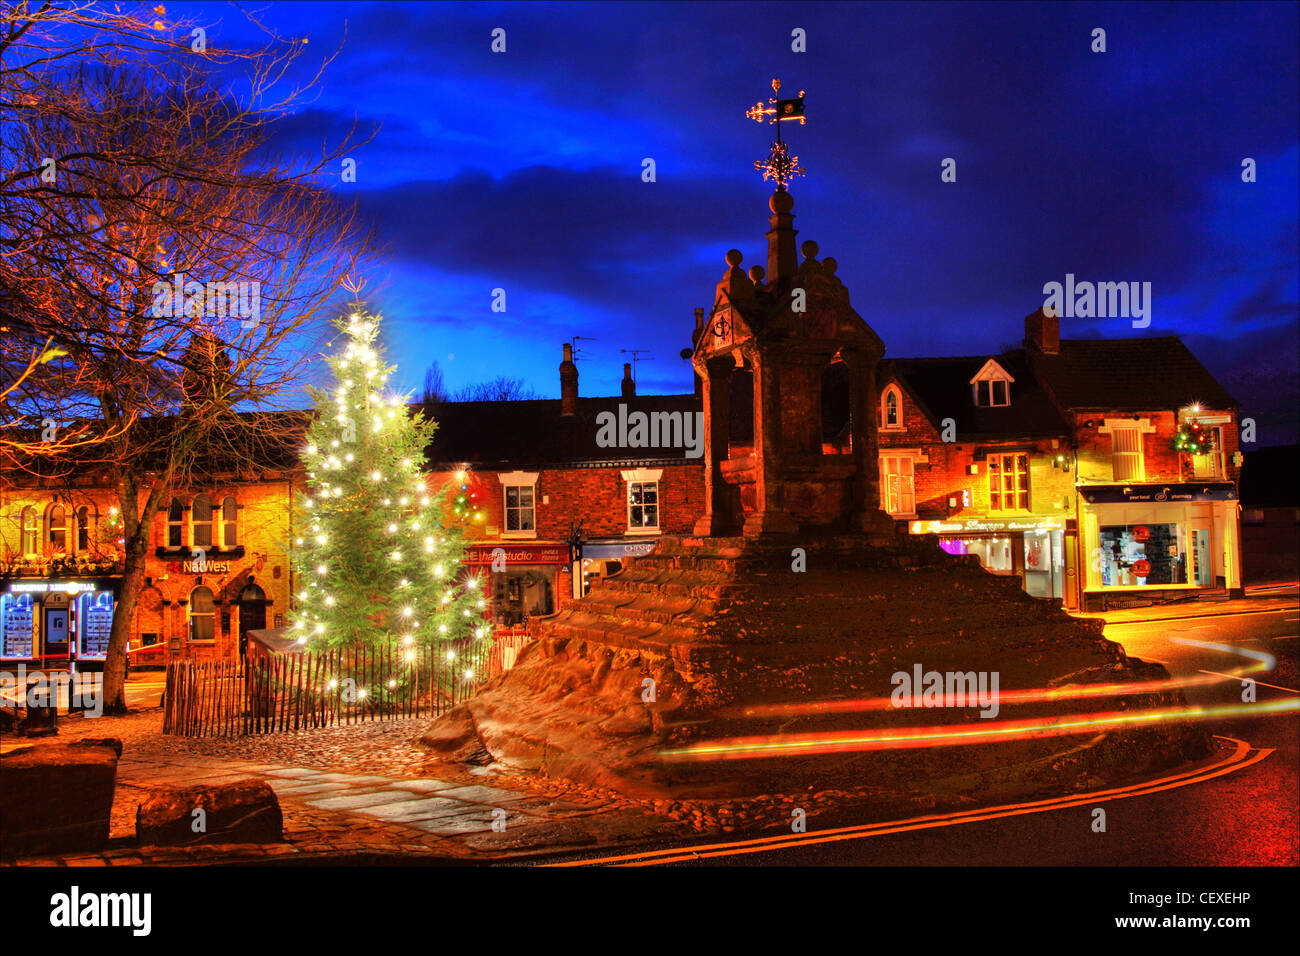 Xmas scene at the Christmas Tree at Lymm Cross, Lymm village, Cheshire, England, UK Stock Photo